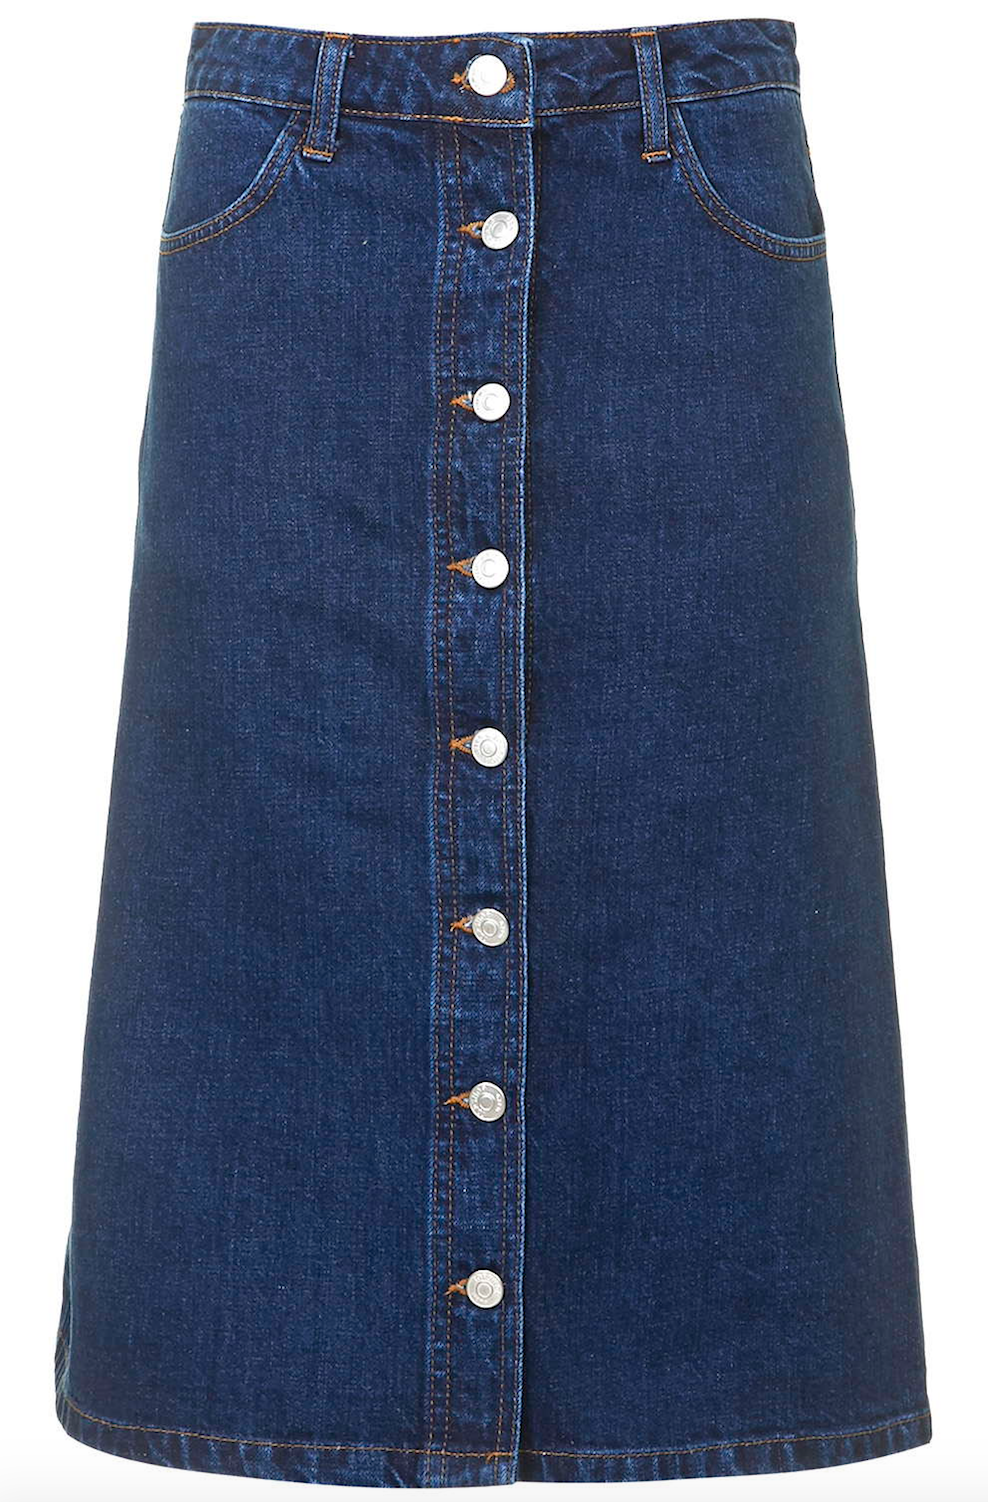 Wearing It Today: The season update: the denim midi skirt